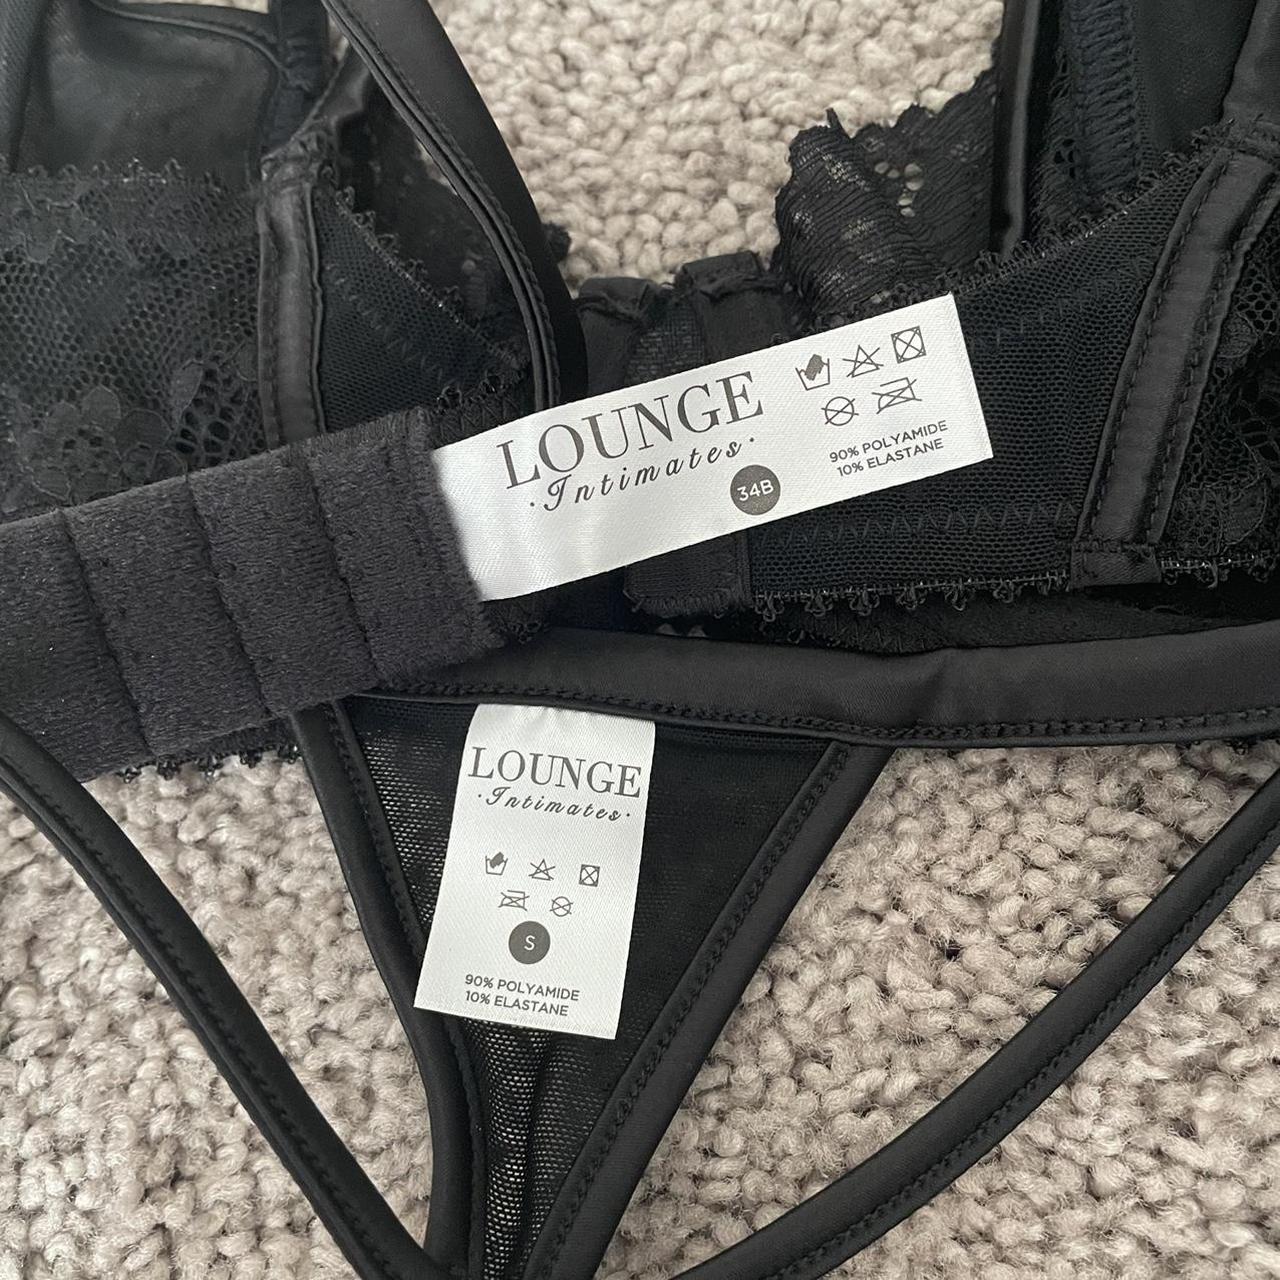 lounge underwear - Poshmark